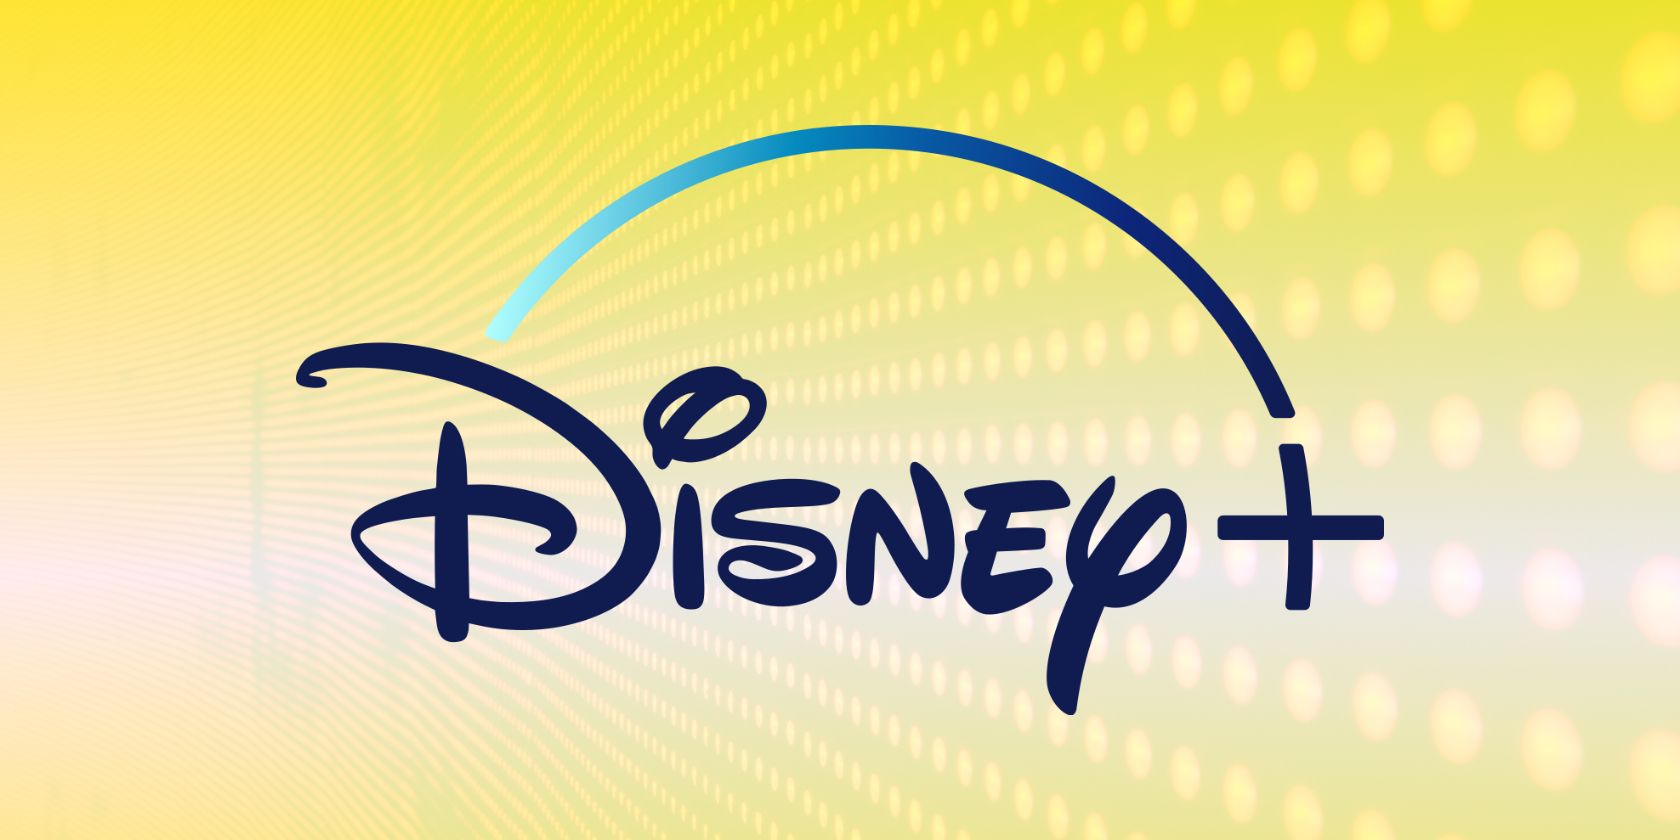 The Disney+ logo